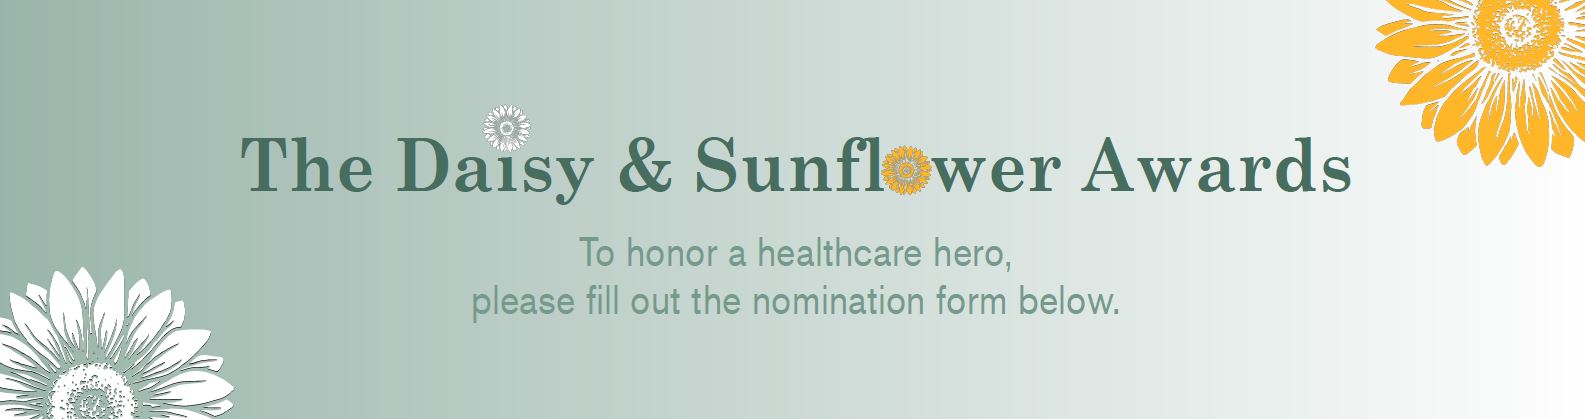 The Daisy and Sunflower Awards